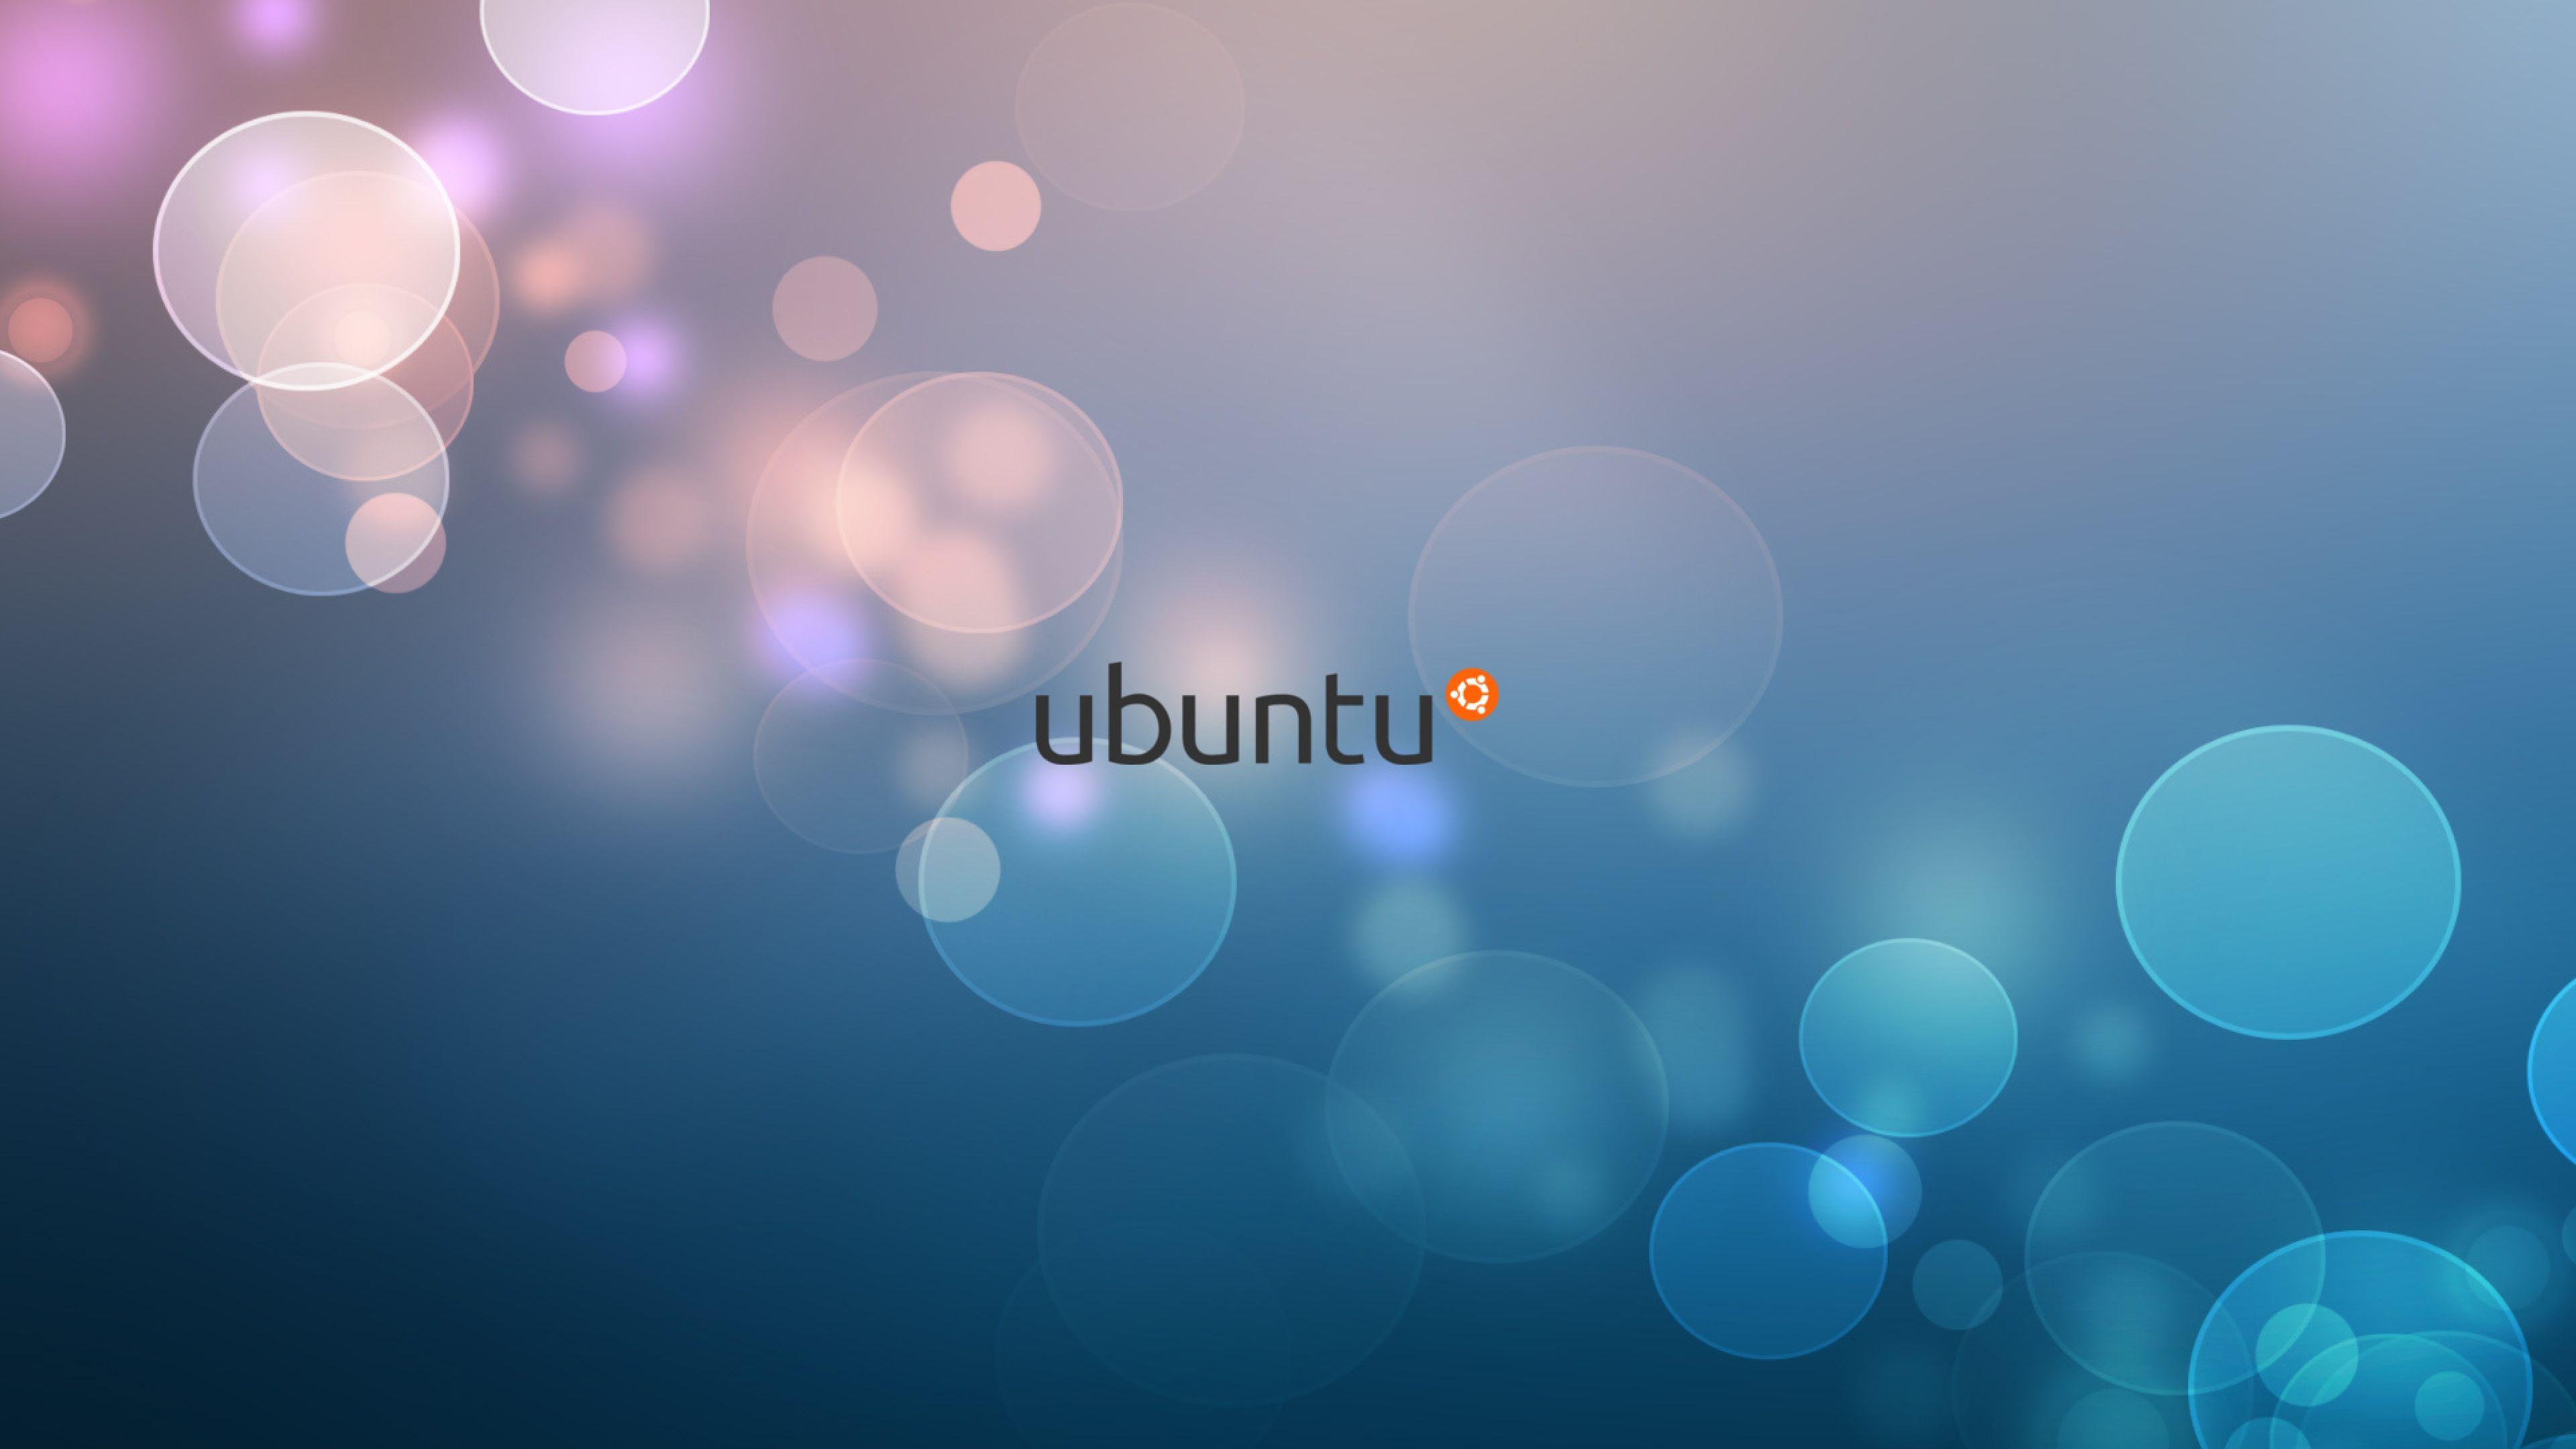 Ubuntu Logo HD Logo, 4k Wallpaper, Image, Background, Photo